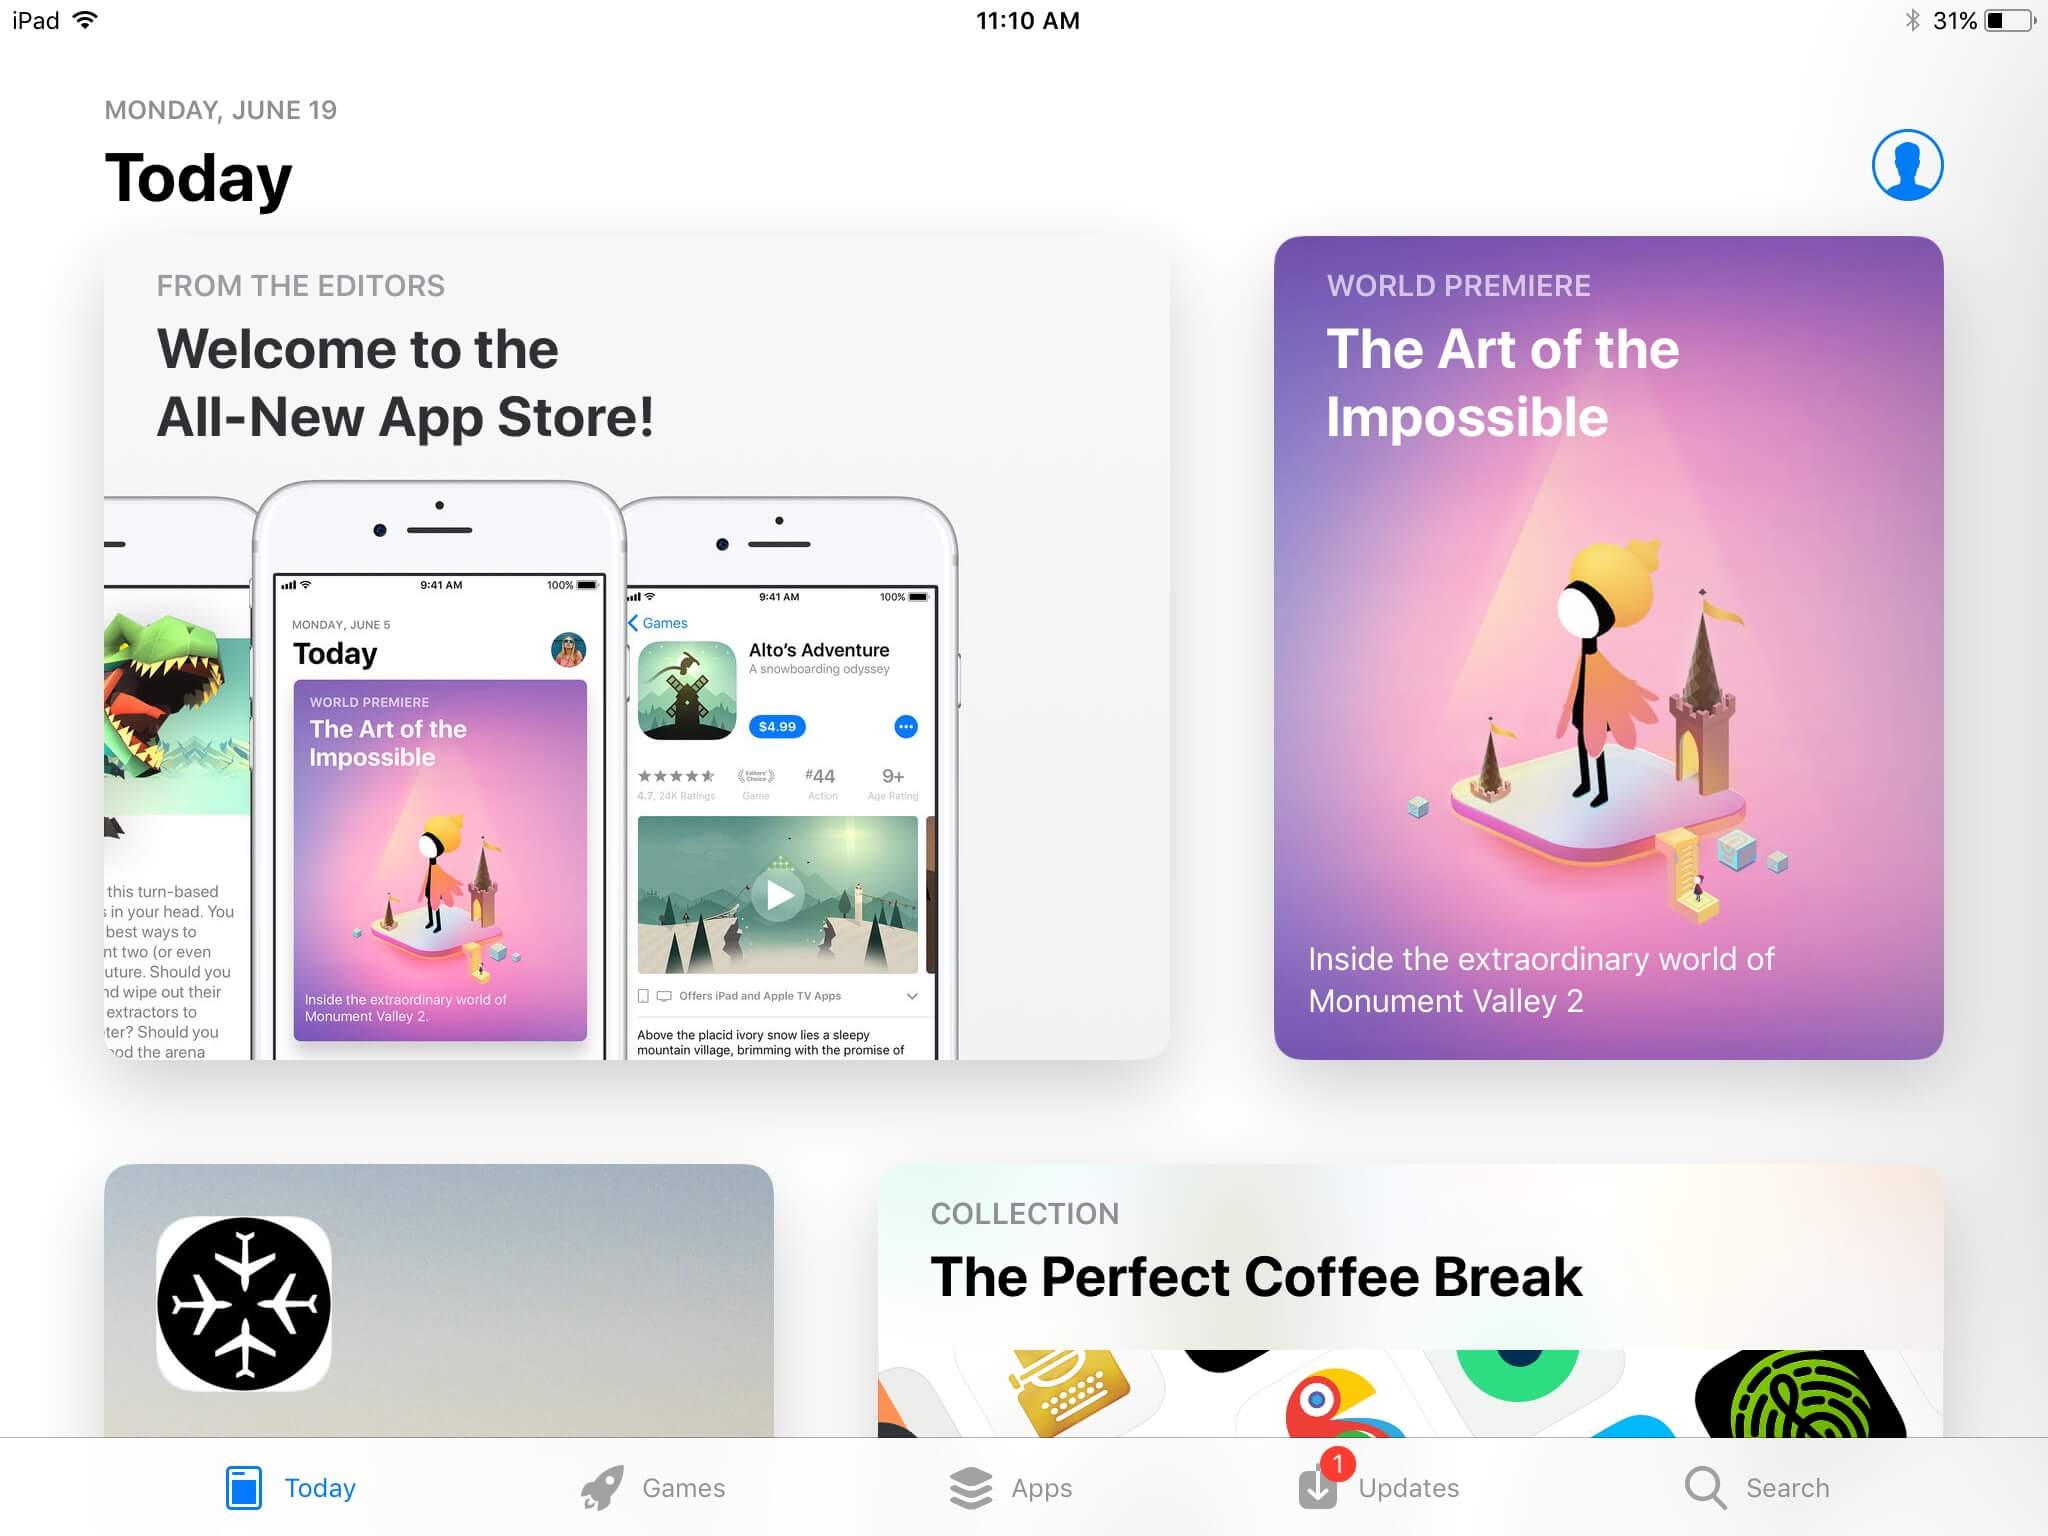 App Store iOS 11 for iPad